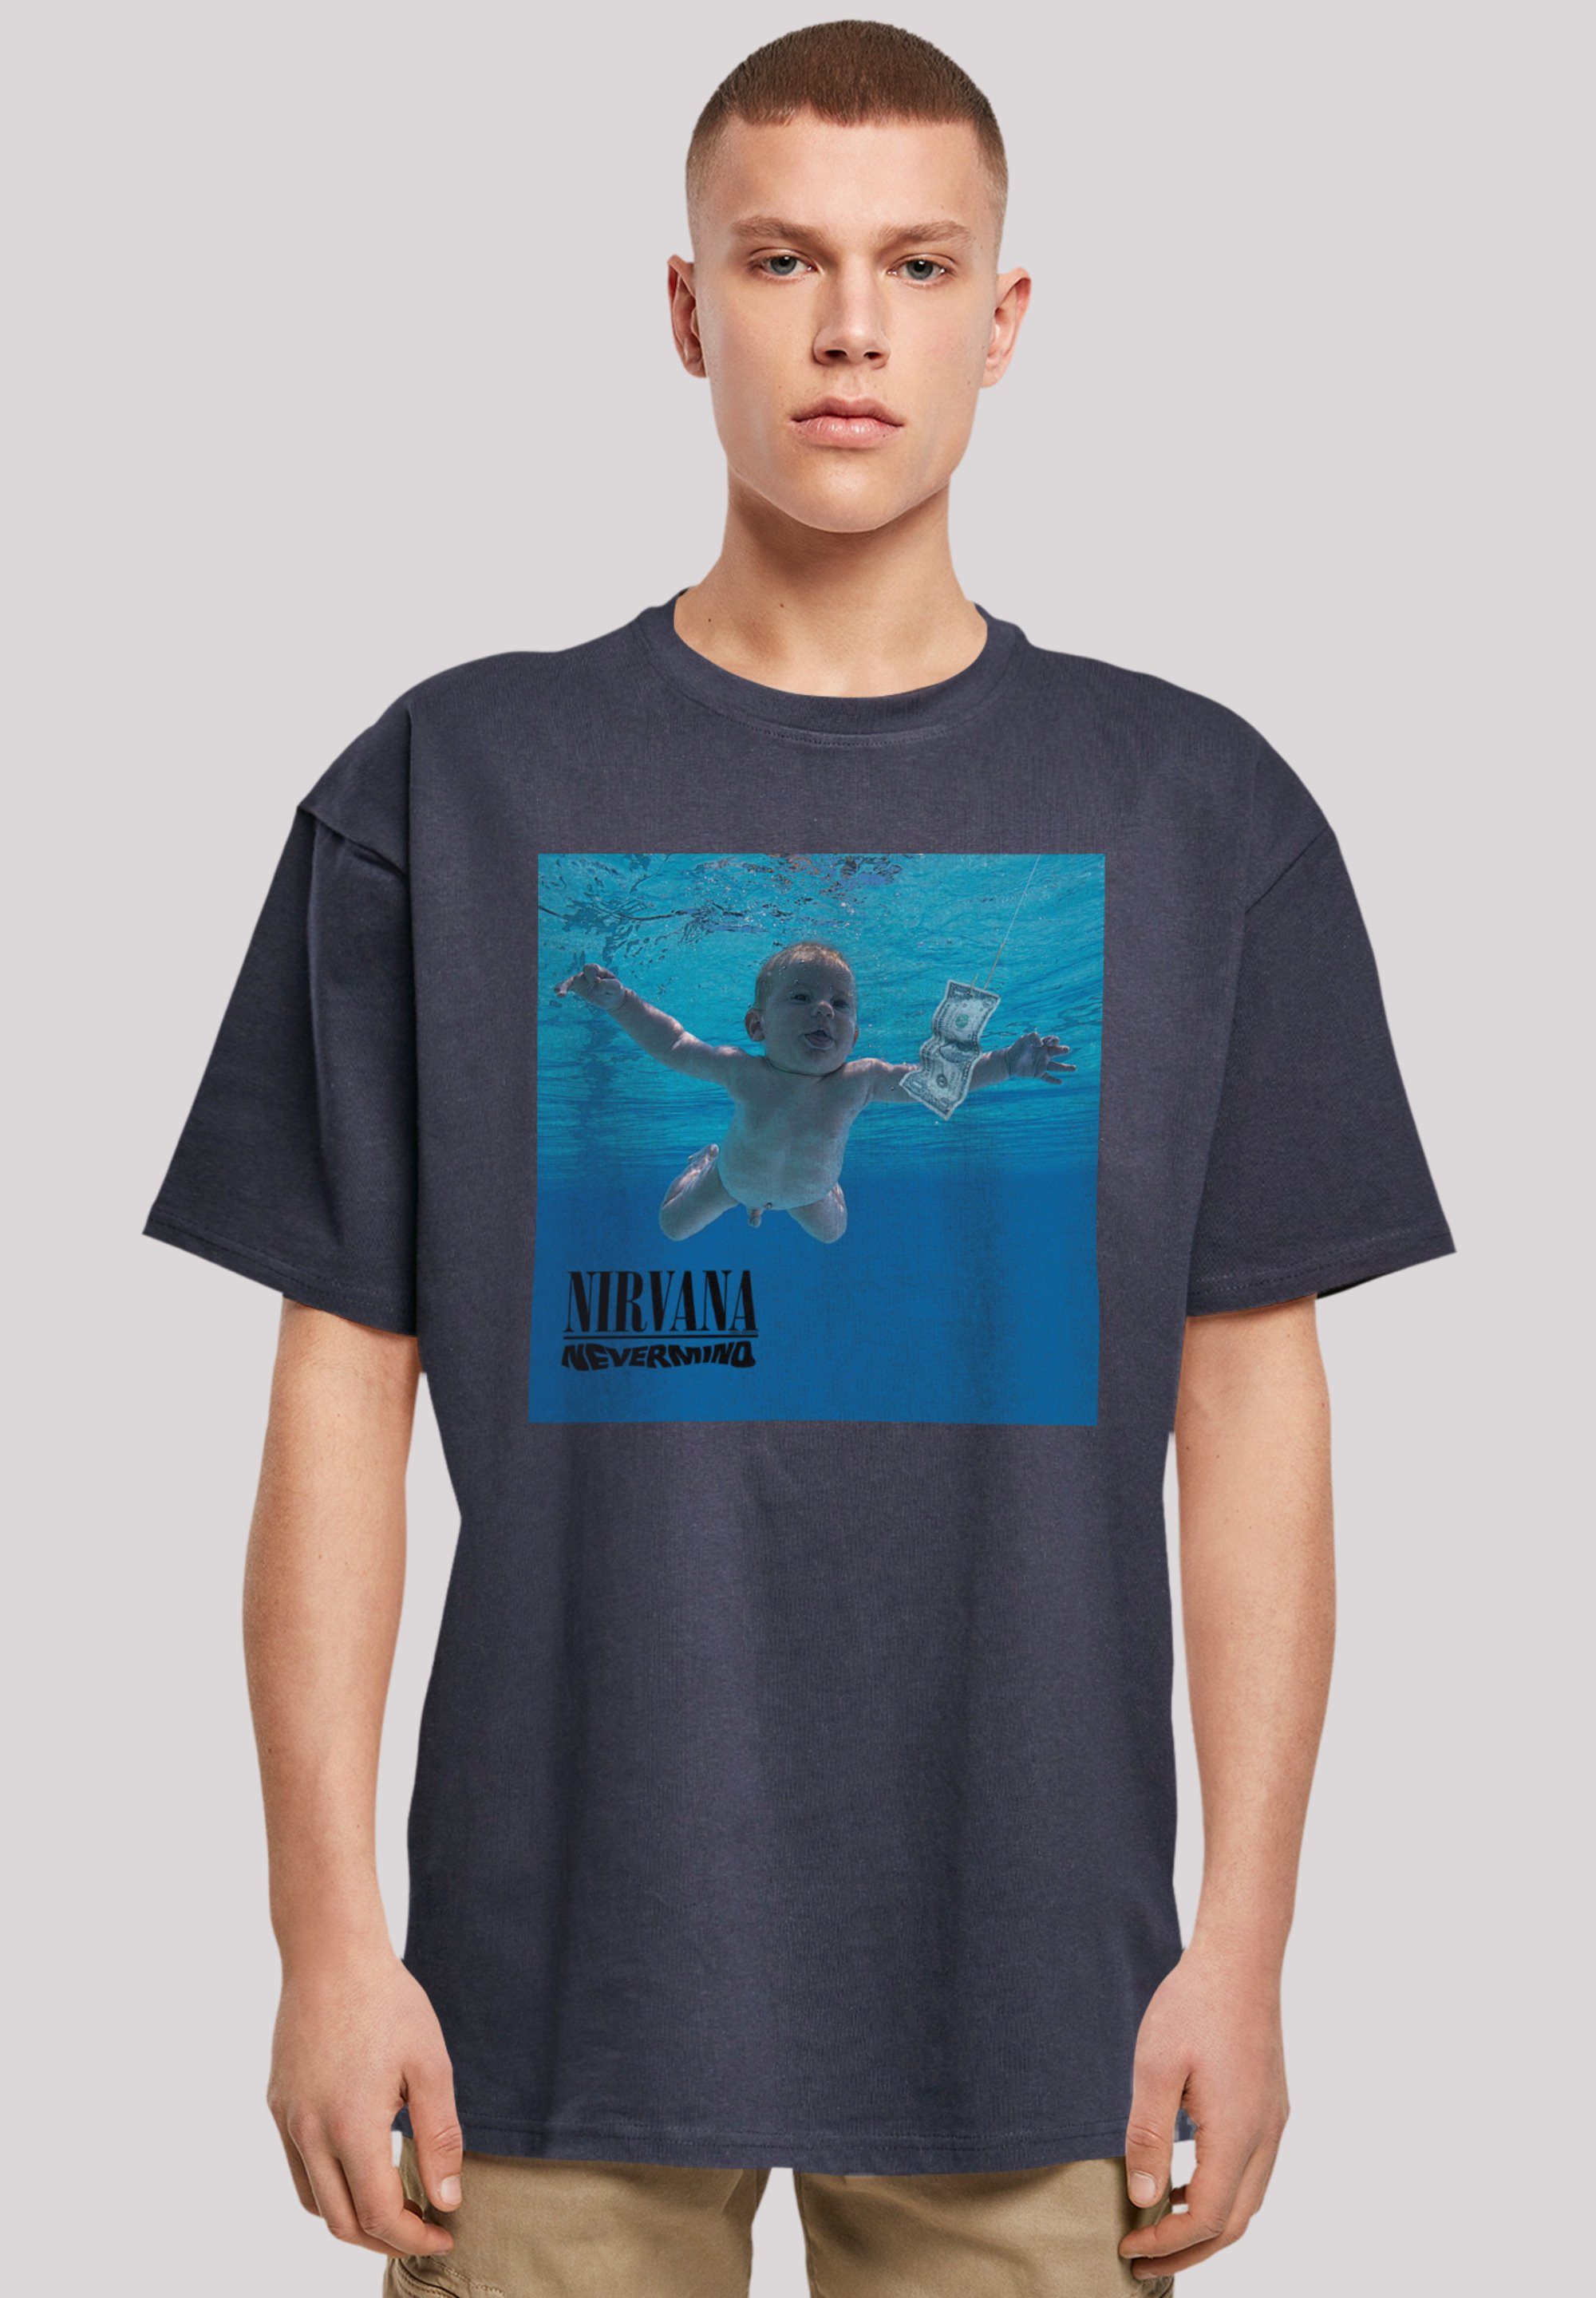 F4NT4STIC T-Shirt Nirvana Rock Band Nevermind Album Premium Qualität navy